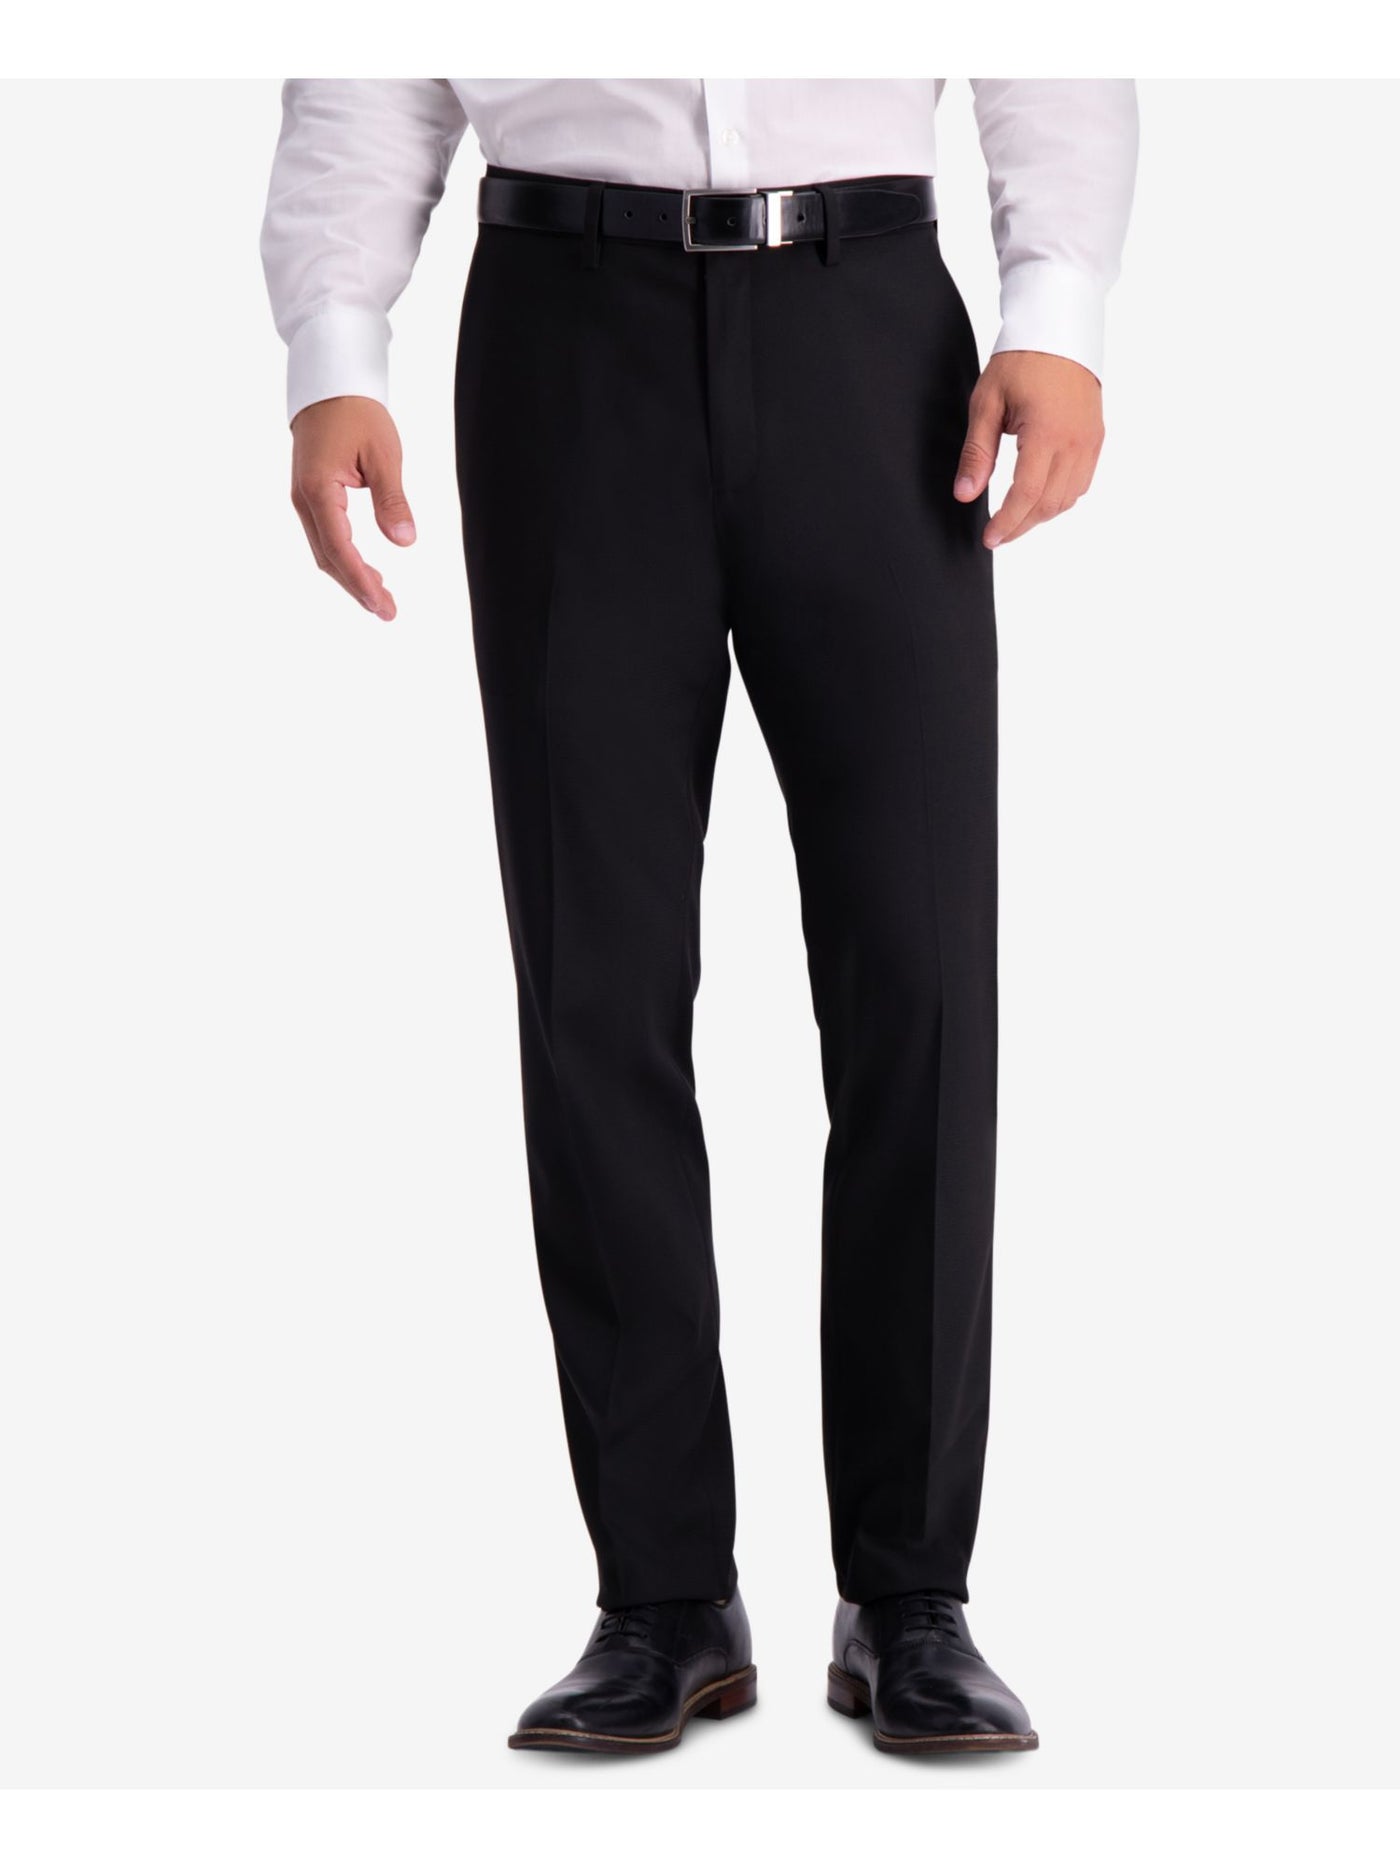 KENNETH COLE Mens Black Patterned Pants W36/ L30